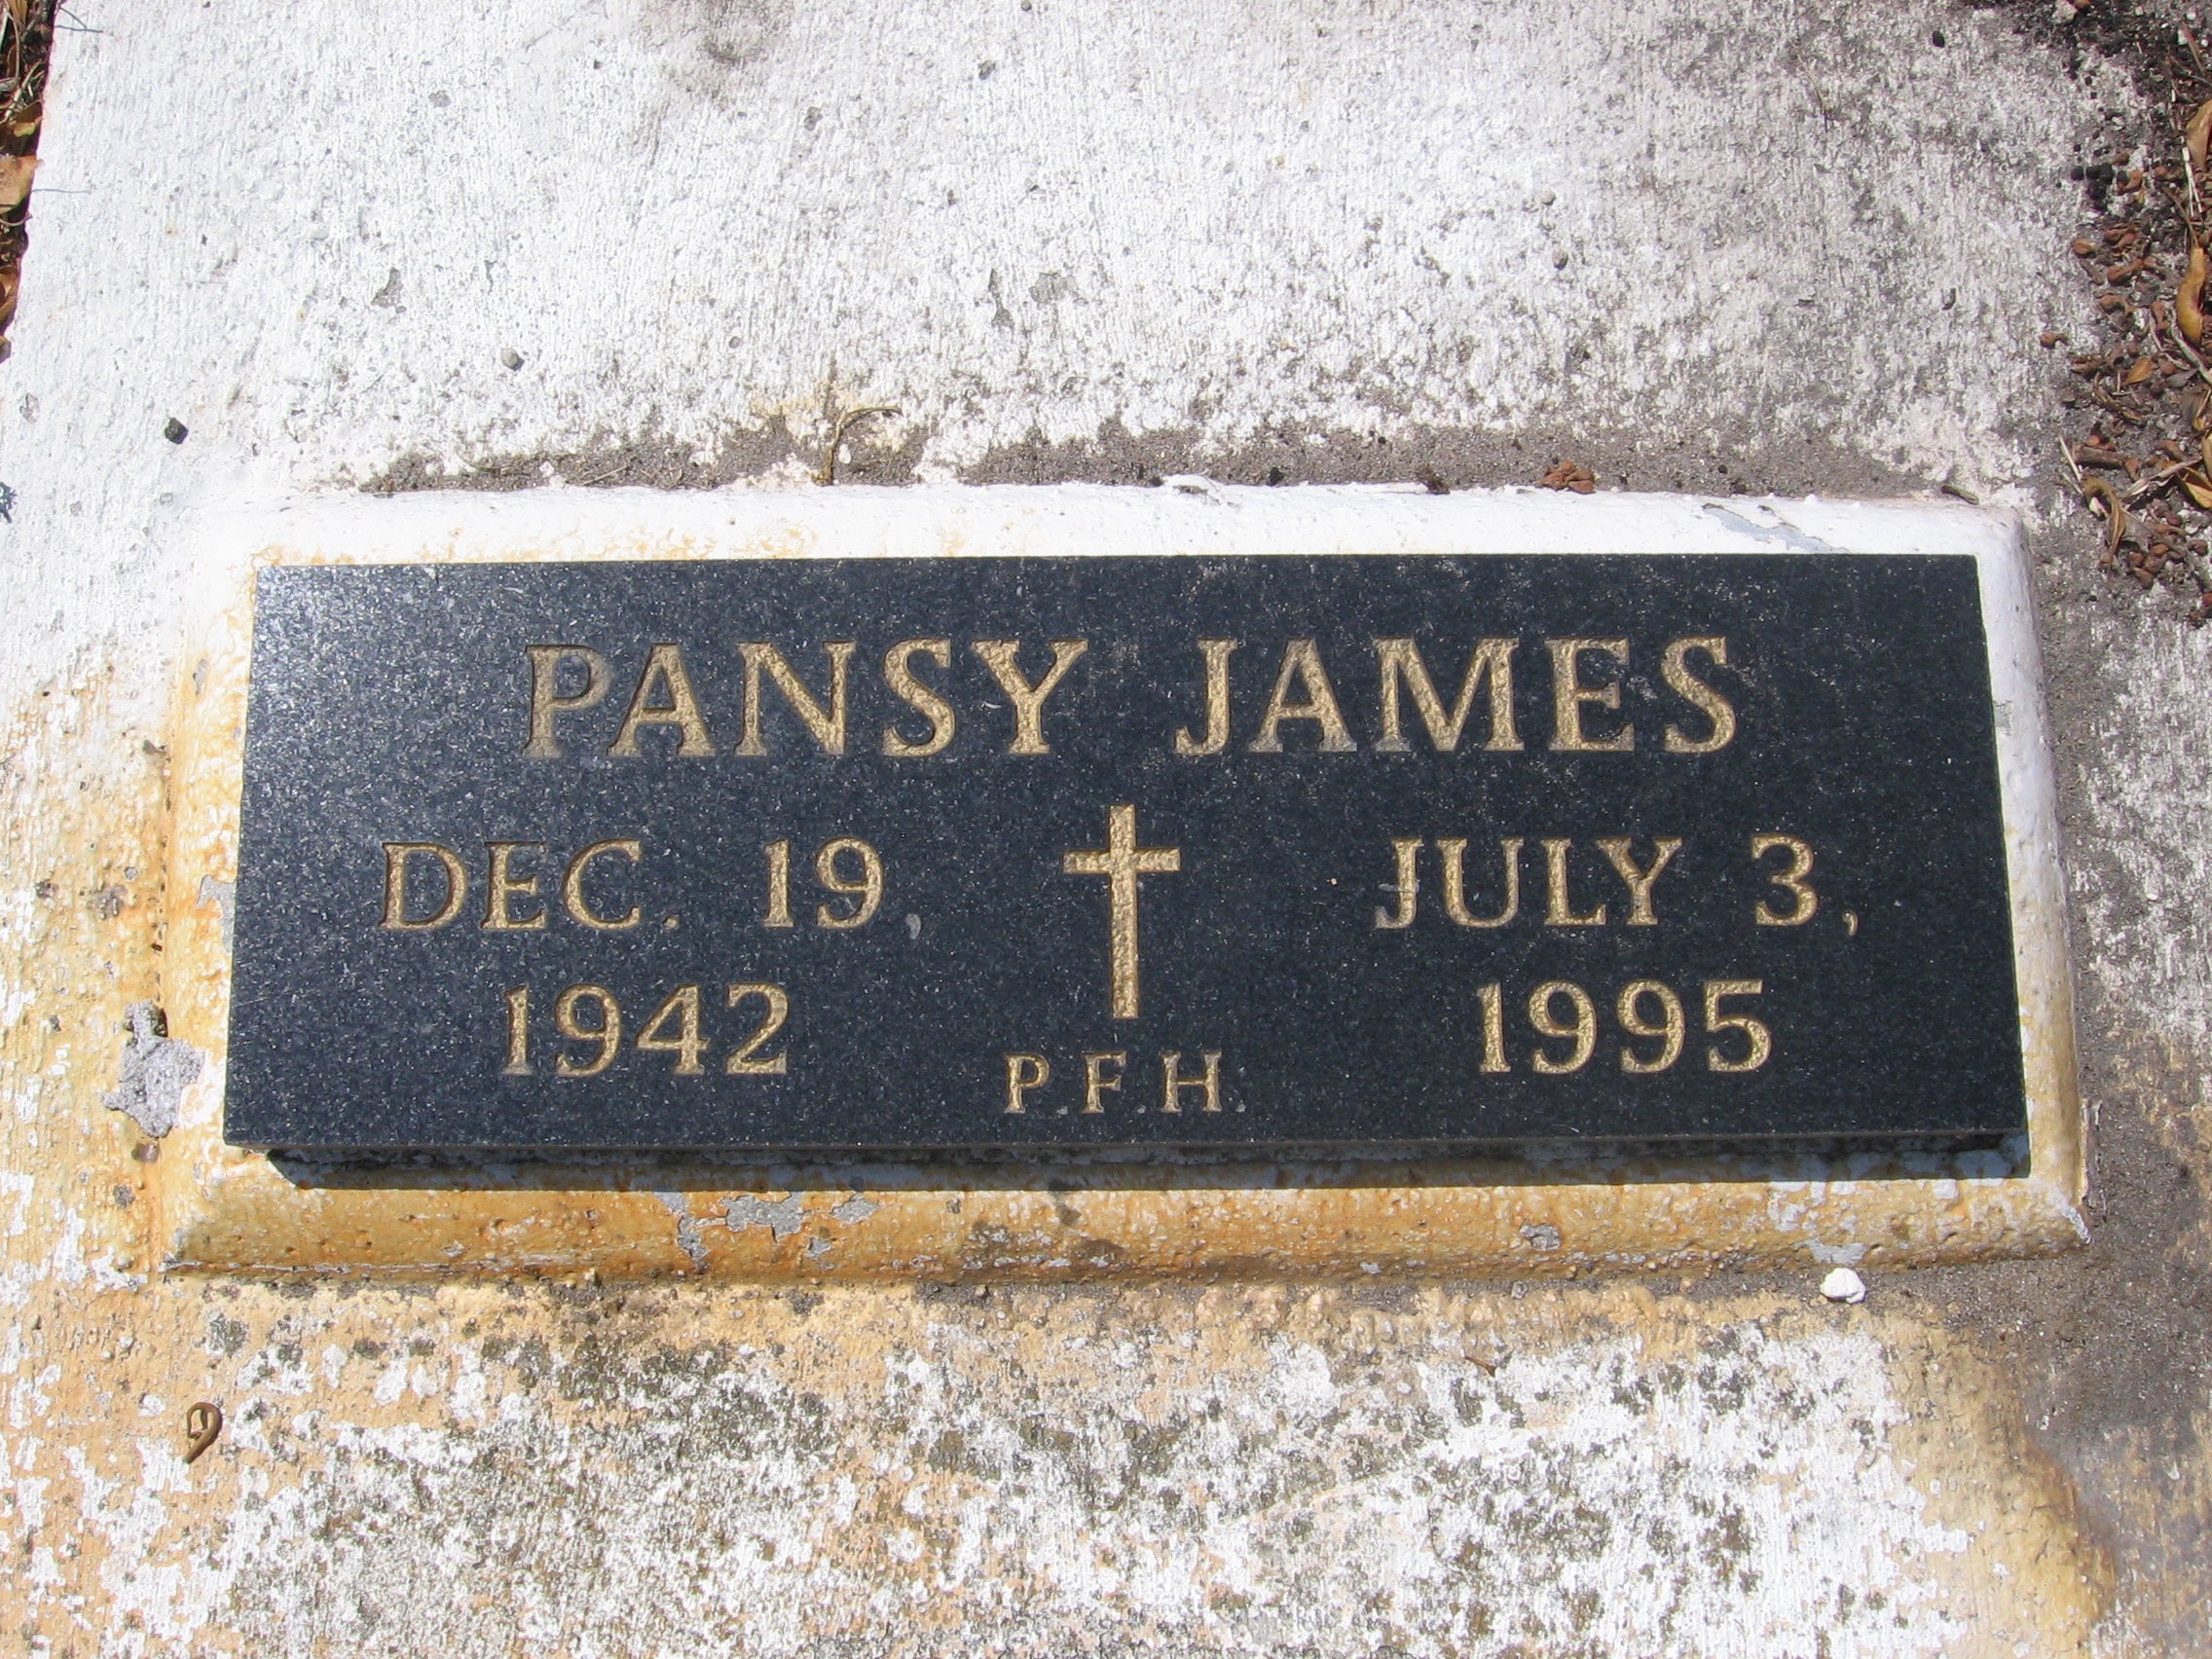 Pansy James